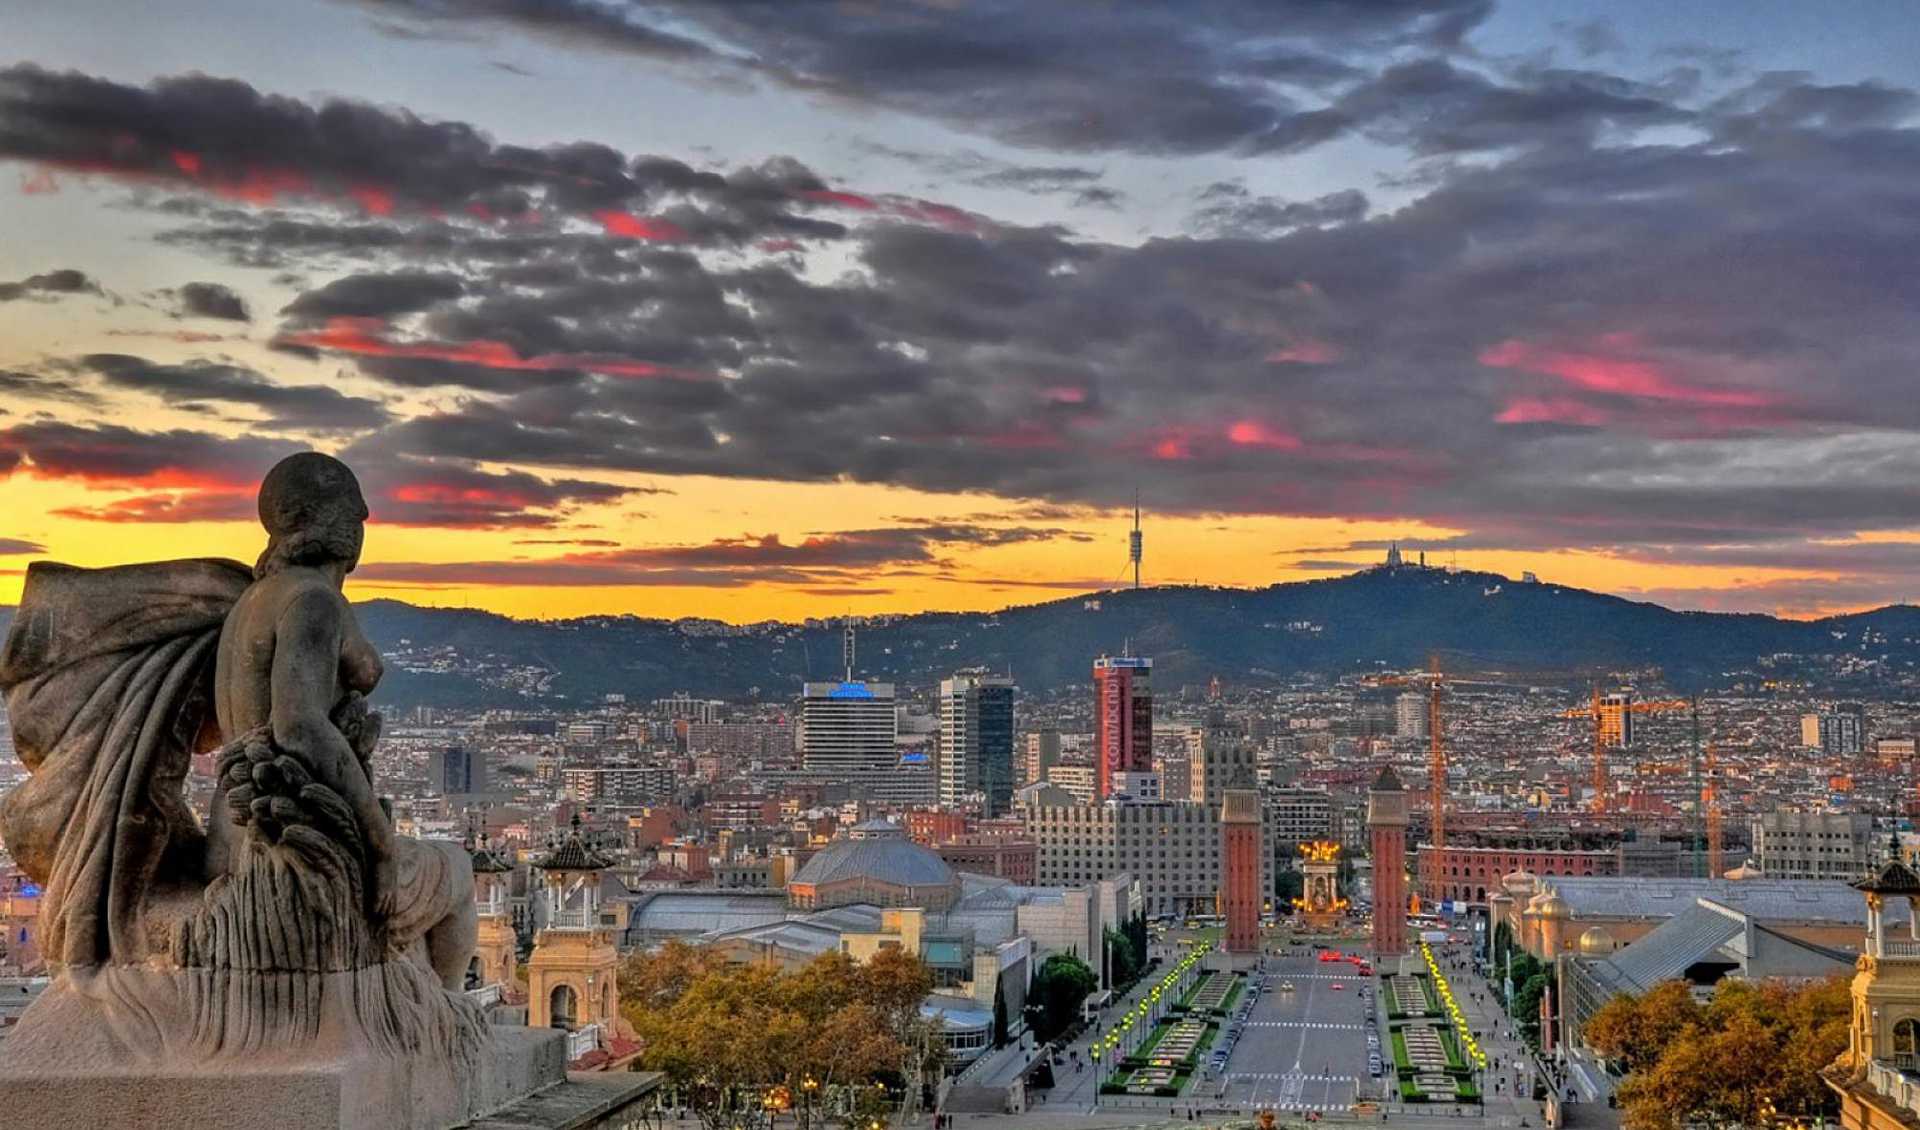 Barcelona in February